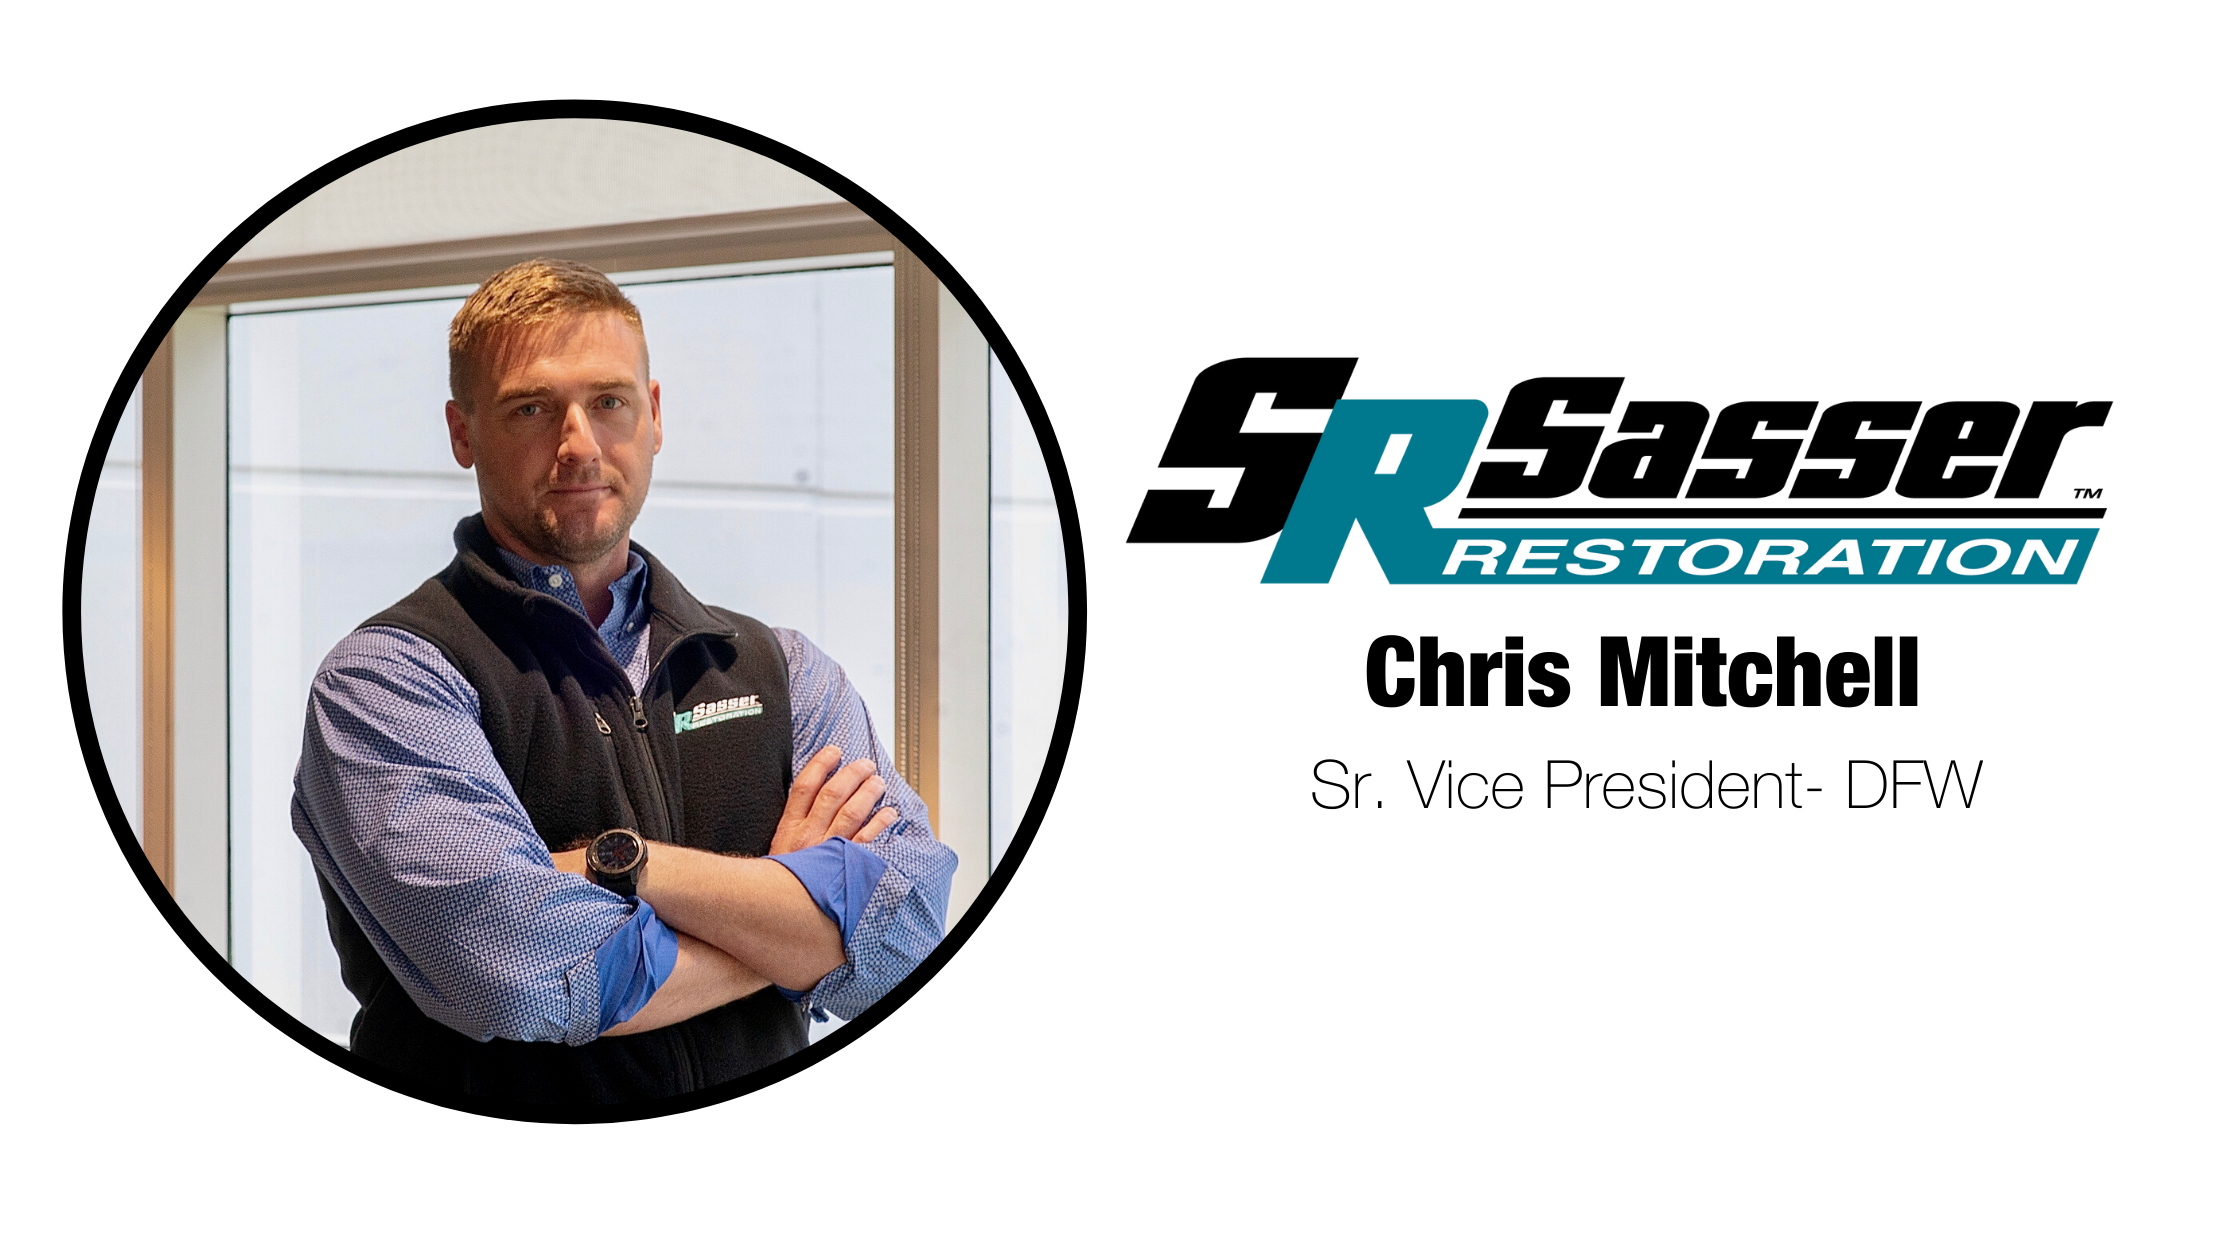 Chris Mitchell is Announced as Sasser's Senior Vice President- DFW